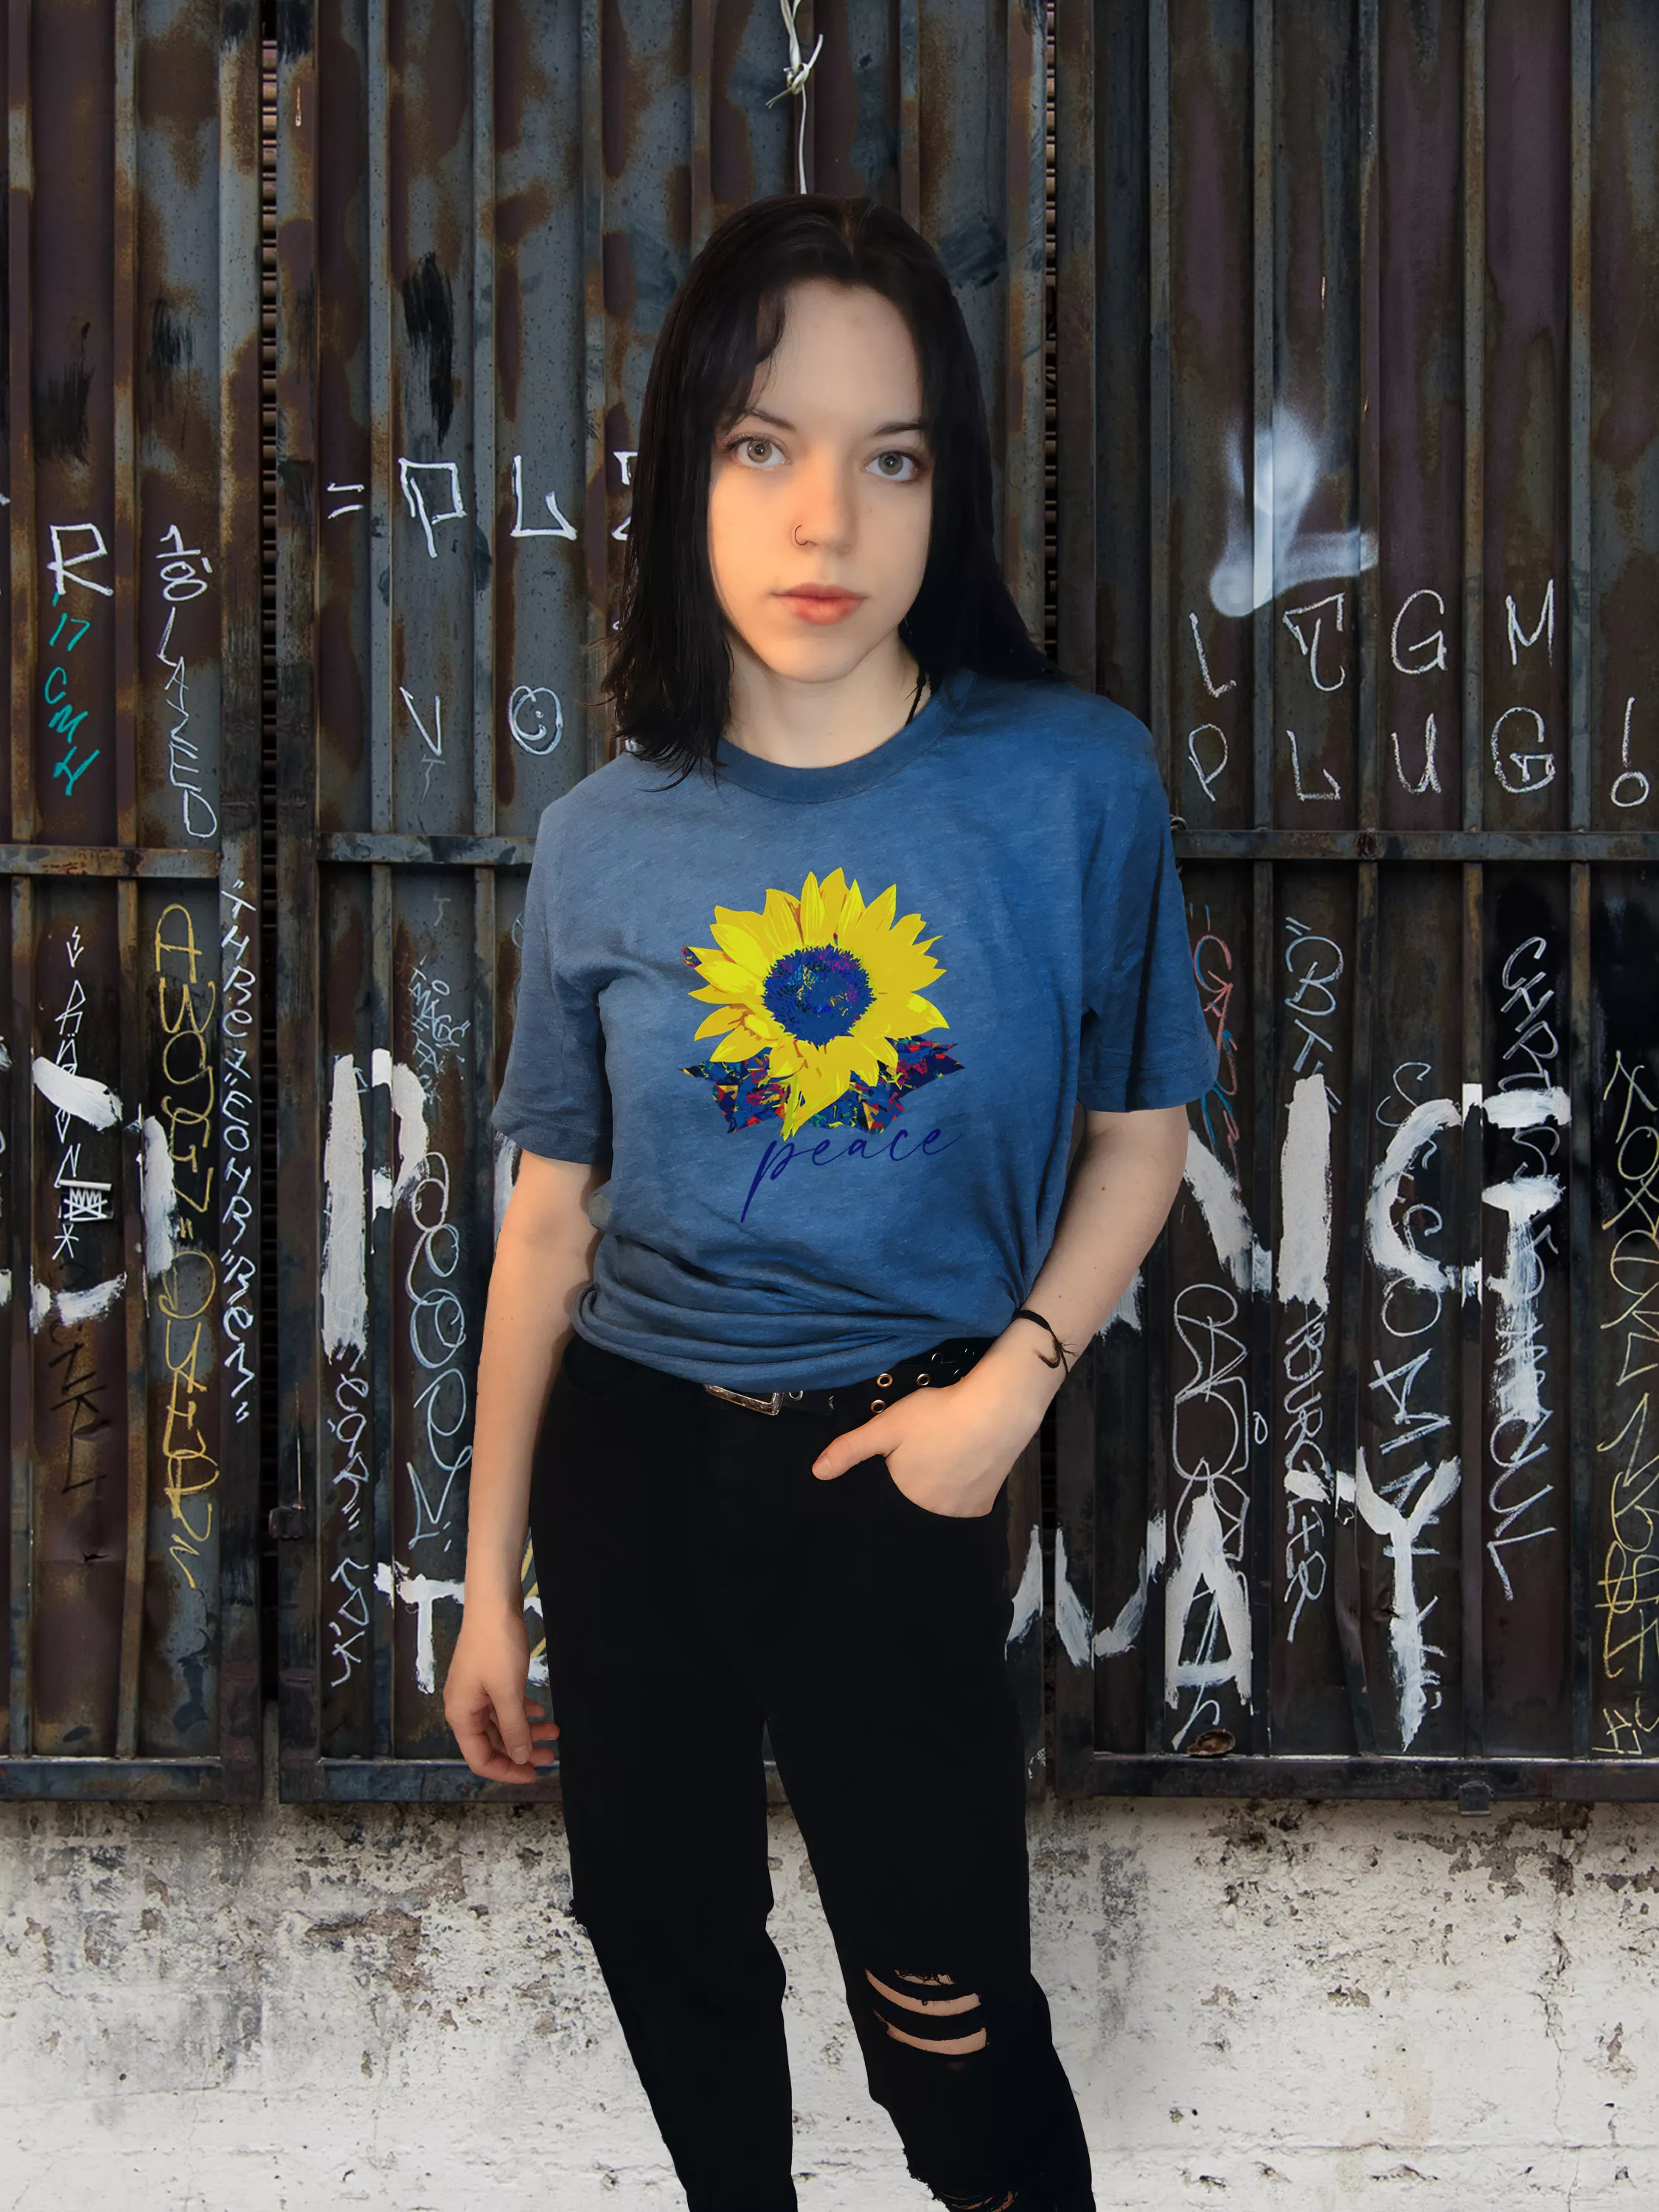 Sunflower For Peace - Blue Tshirt